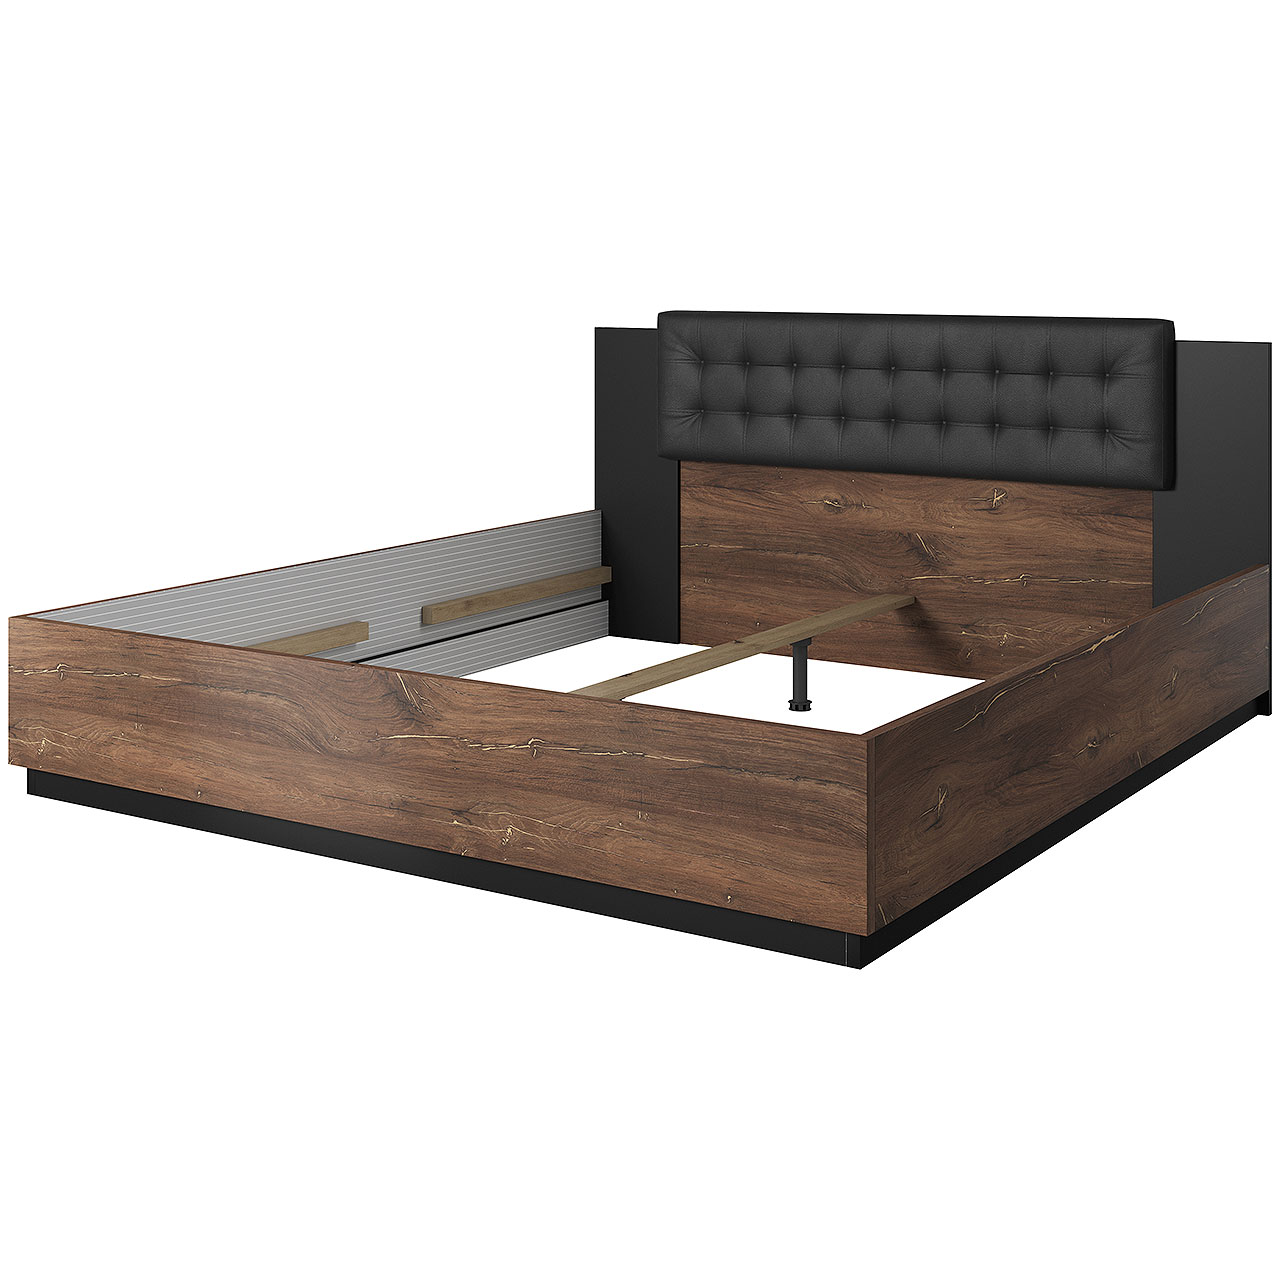 Bed 180x200 SIGMA SG32 oak flagstaf copper / black